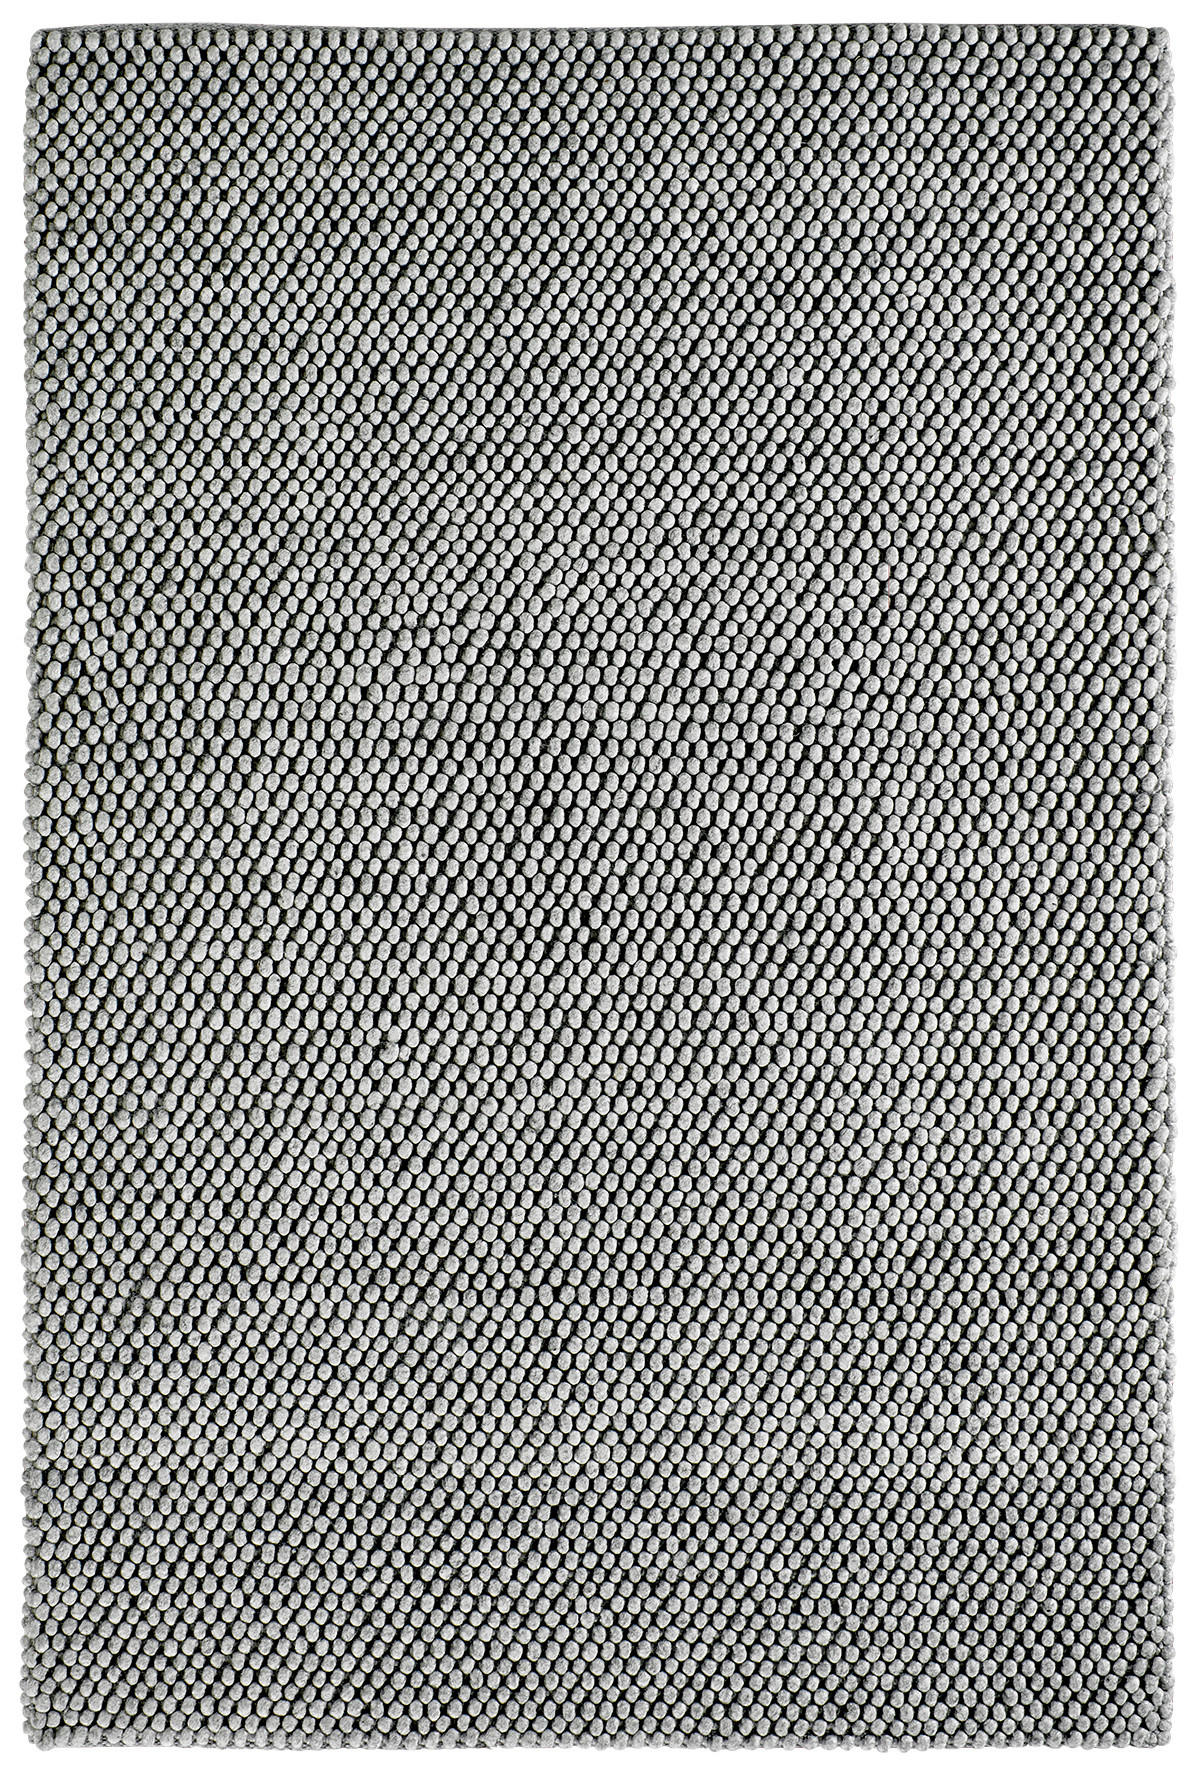 HANDWEBTEPPICH 80/150 cm  - Silberfarben, Basics, Textil (80/150cm) - Linea Natura